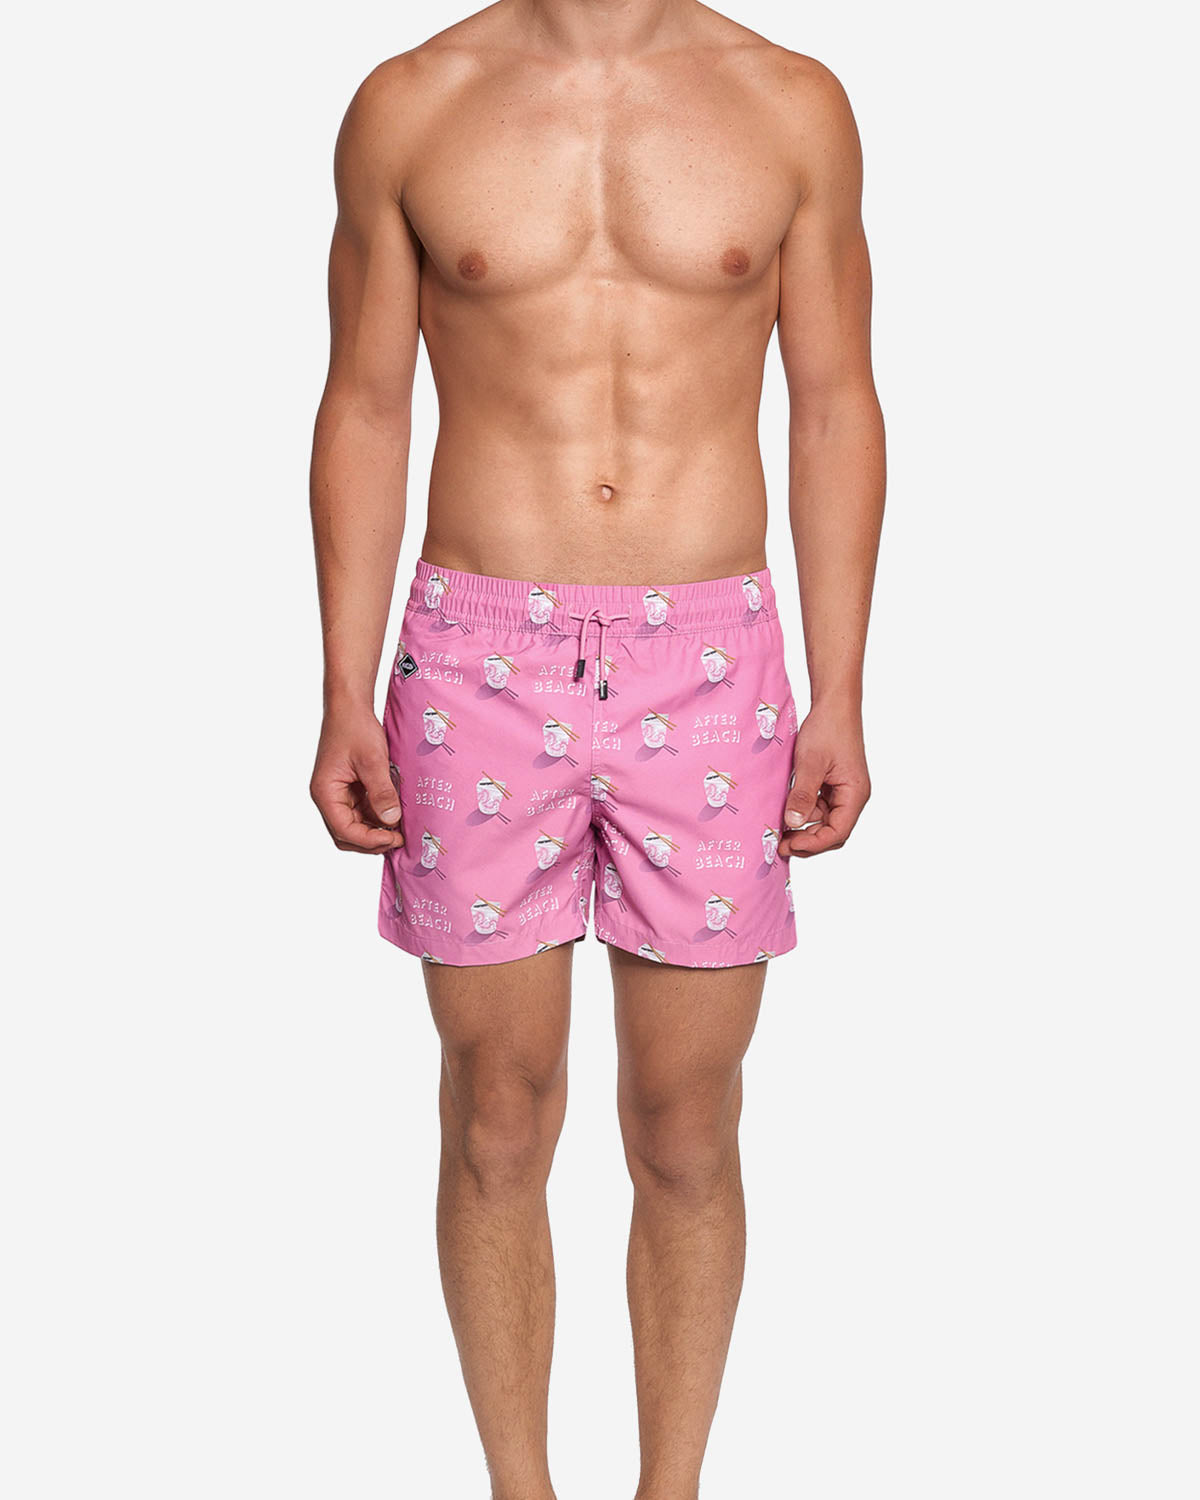 Model wearing pink printed swim trunks